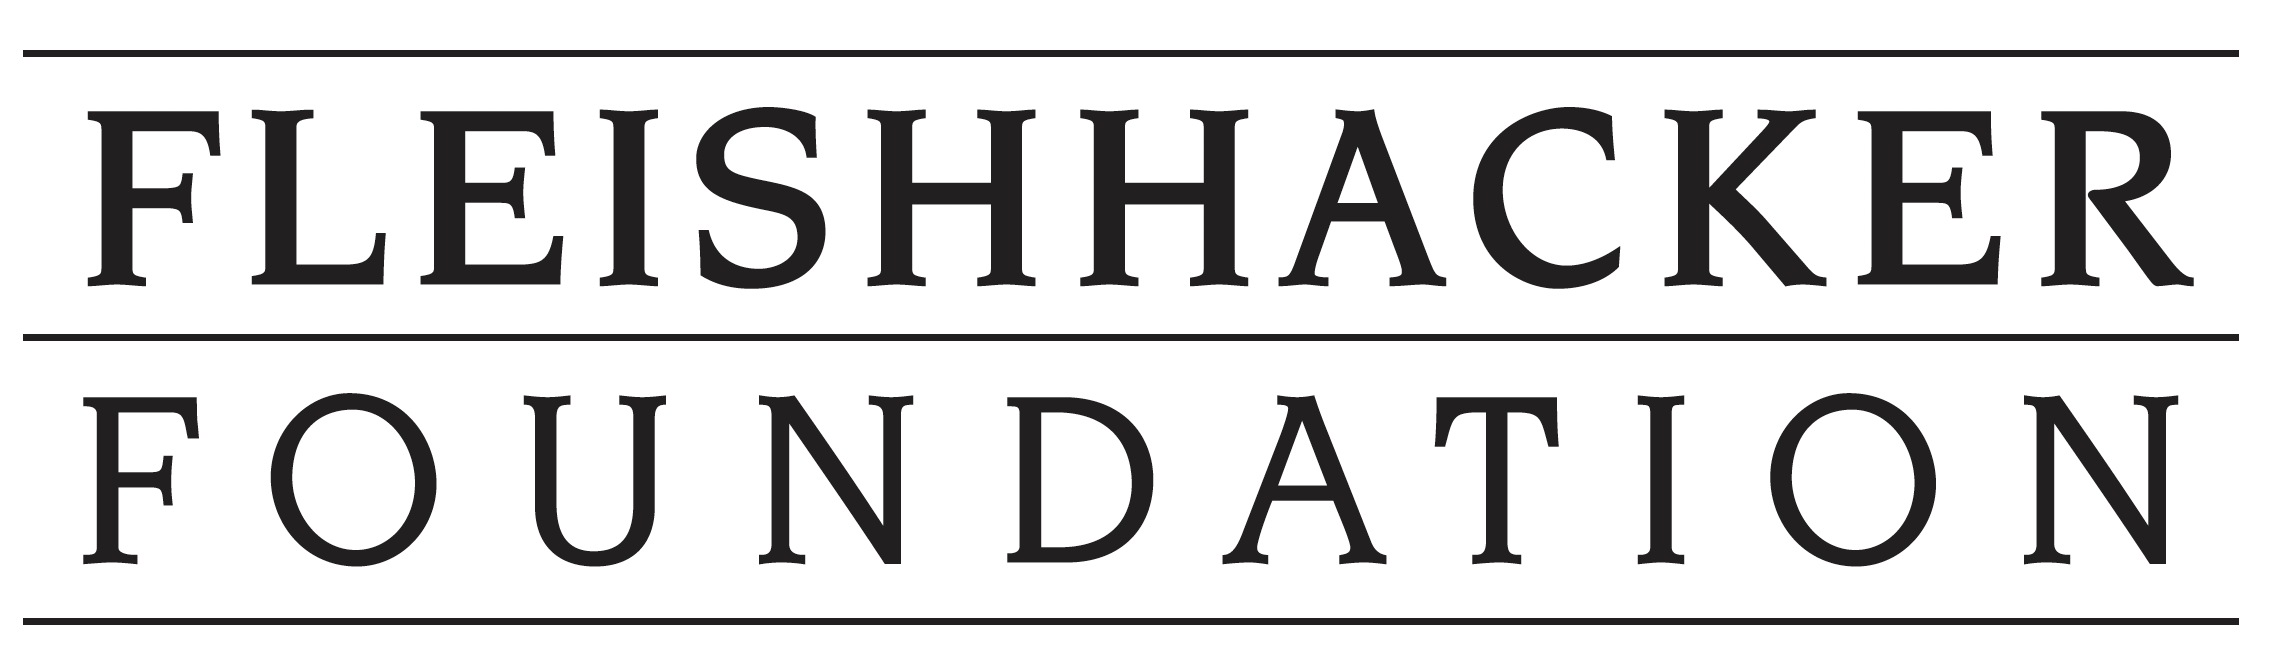 Fleishhacker foundation logo